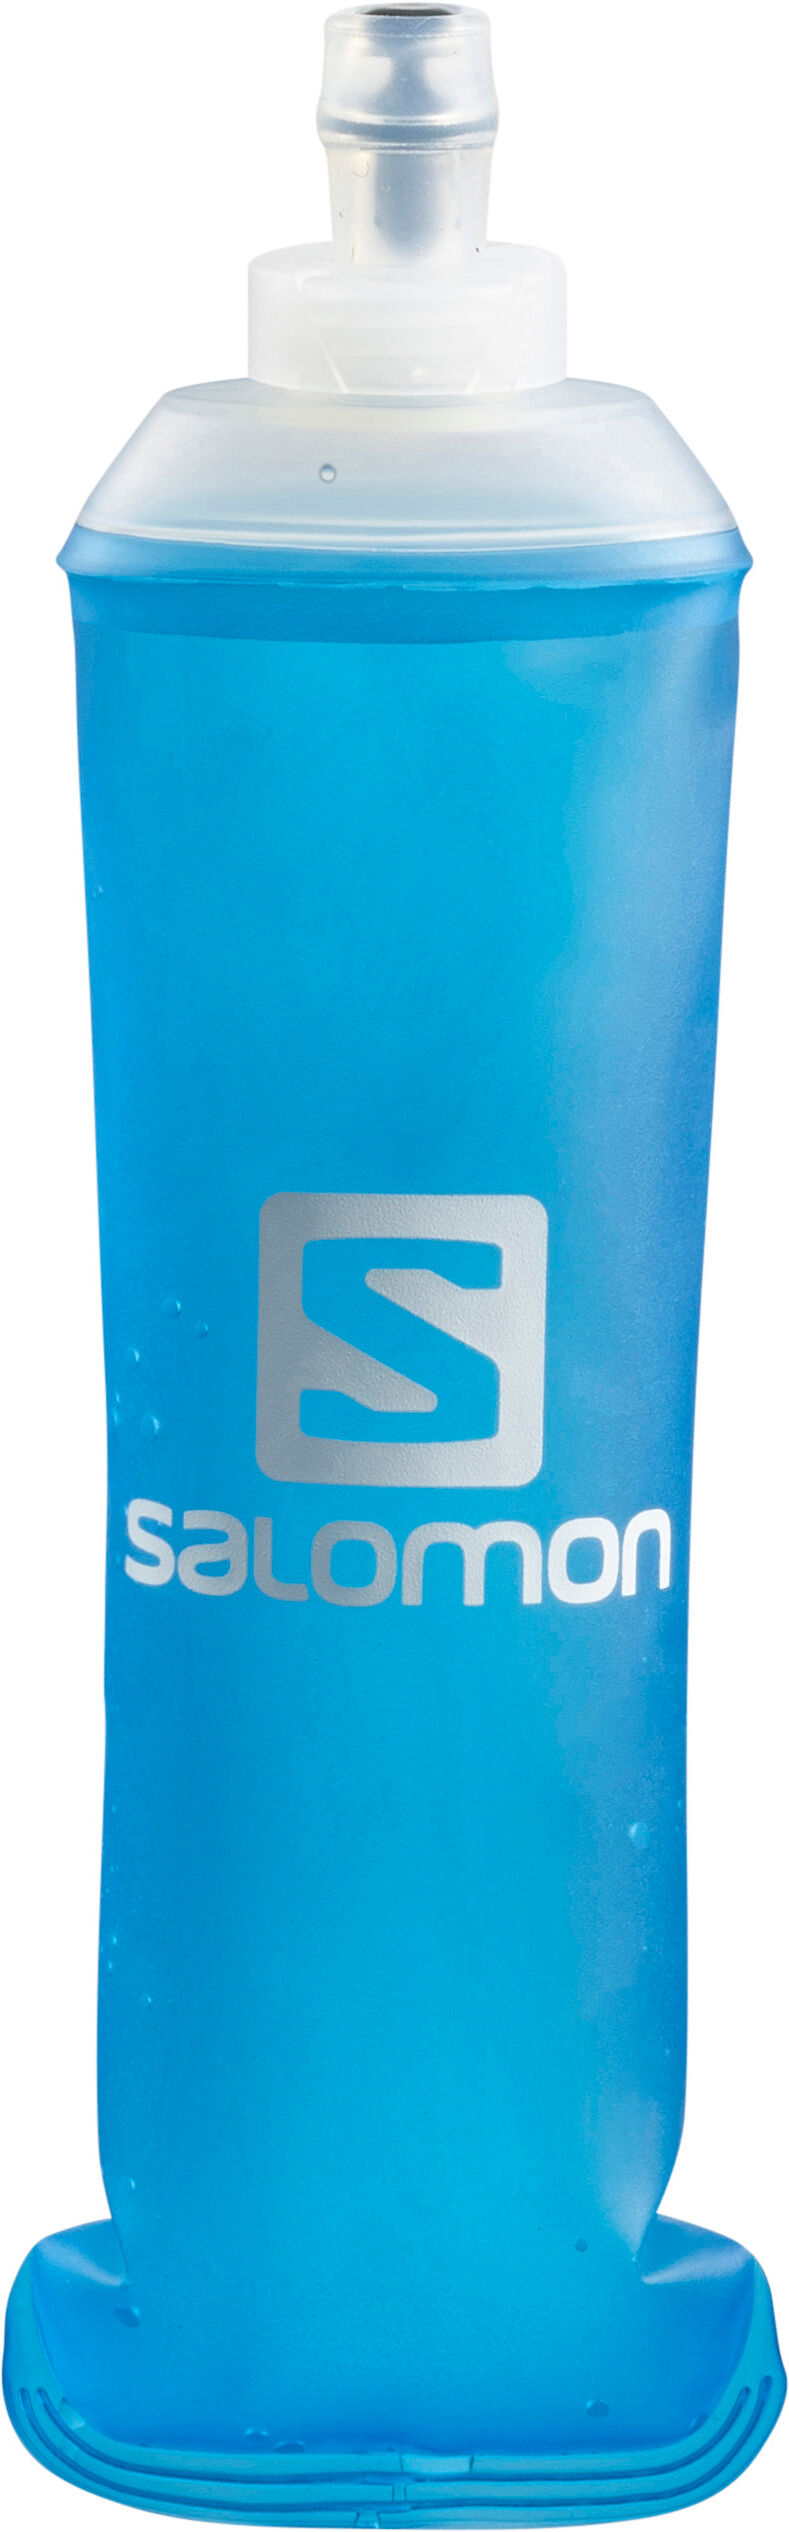 Salomon Soft Flask 500 mL - Drickflaska